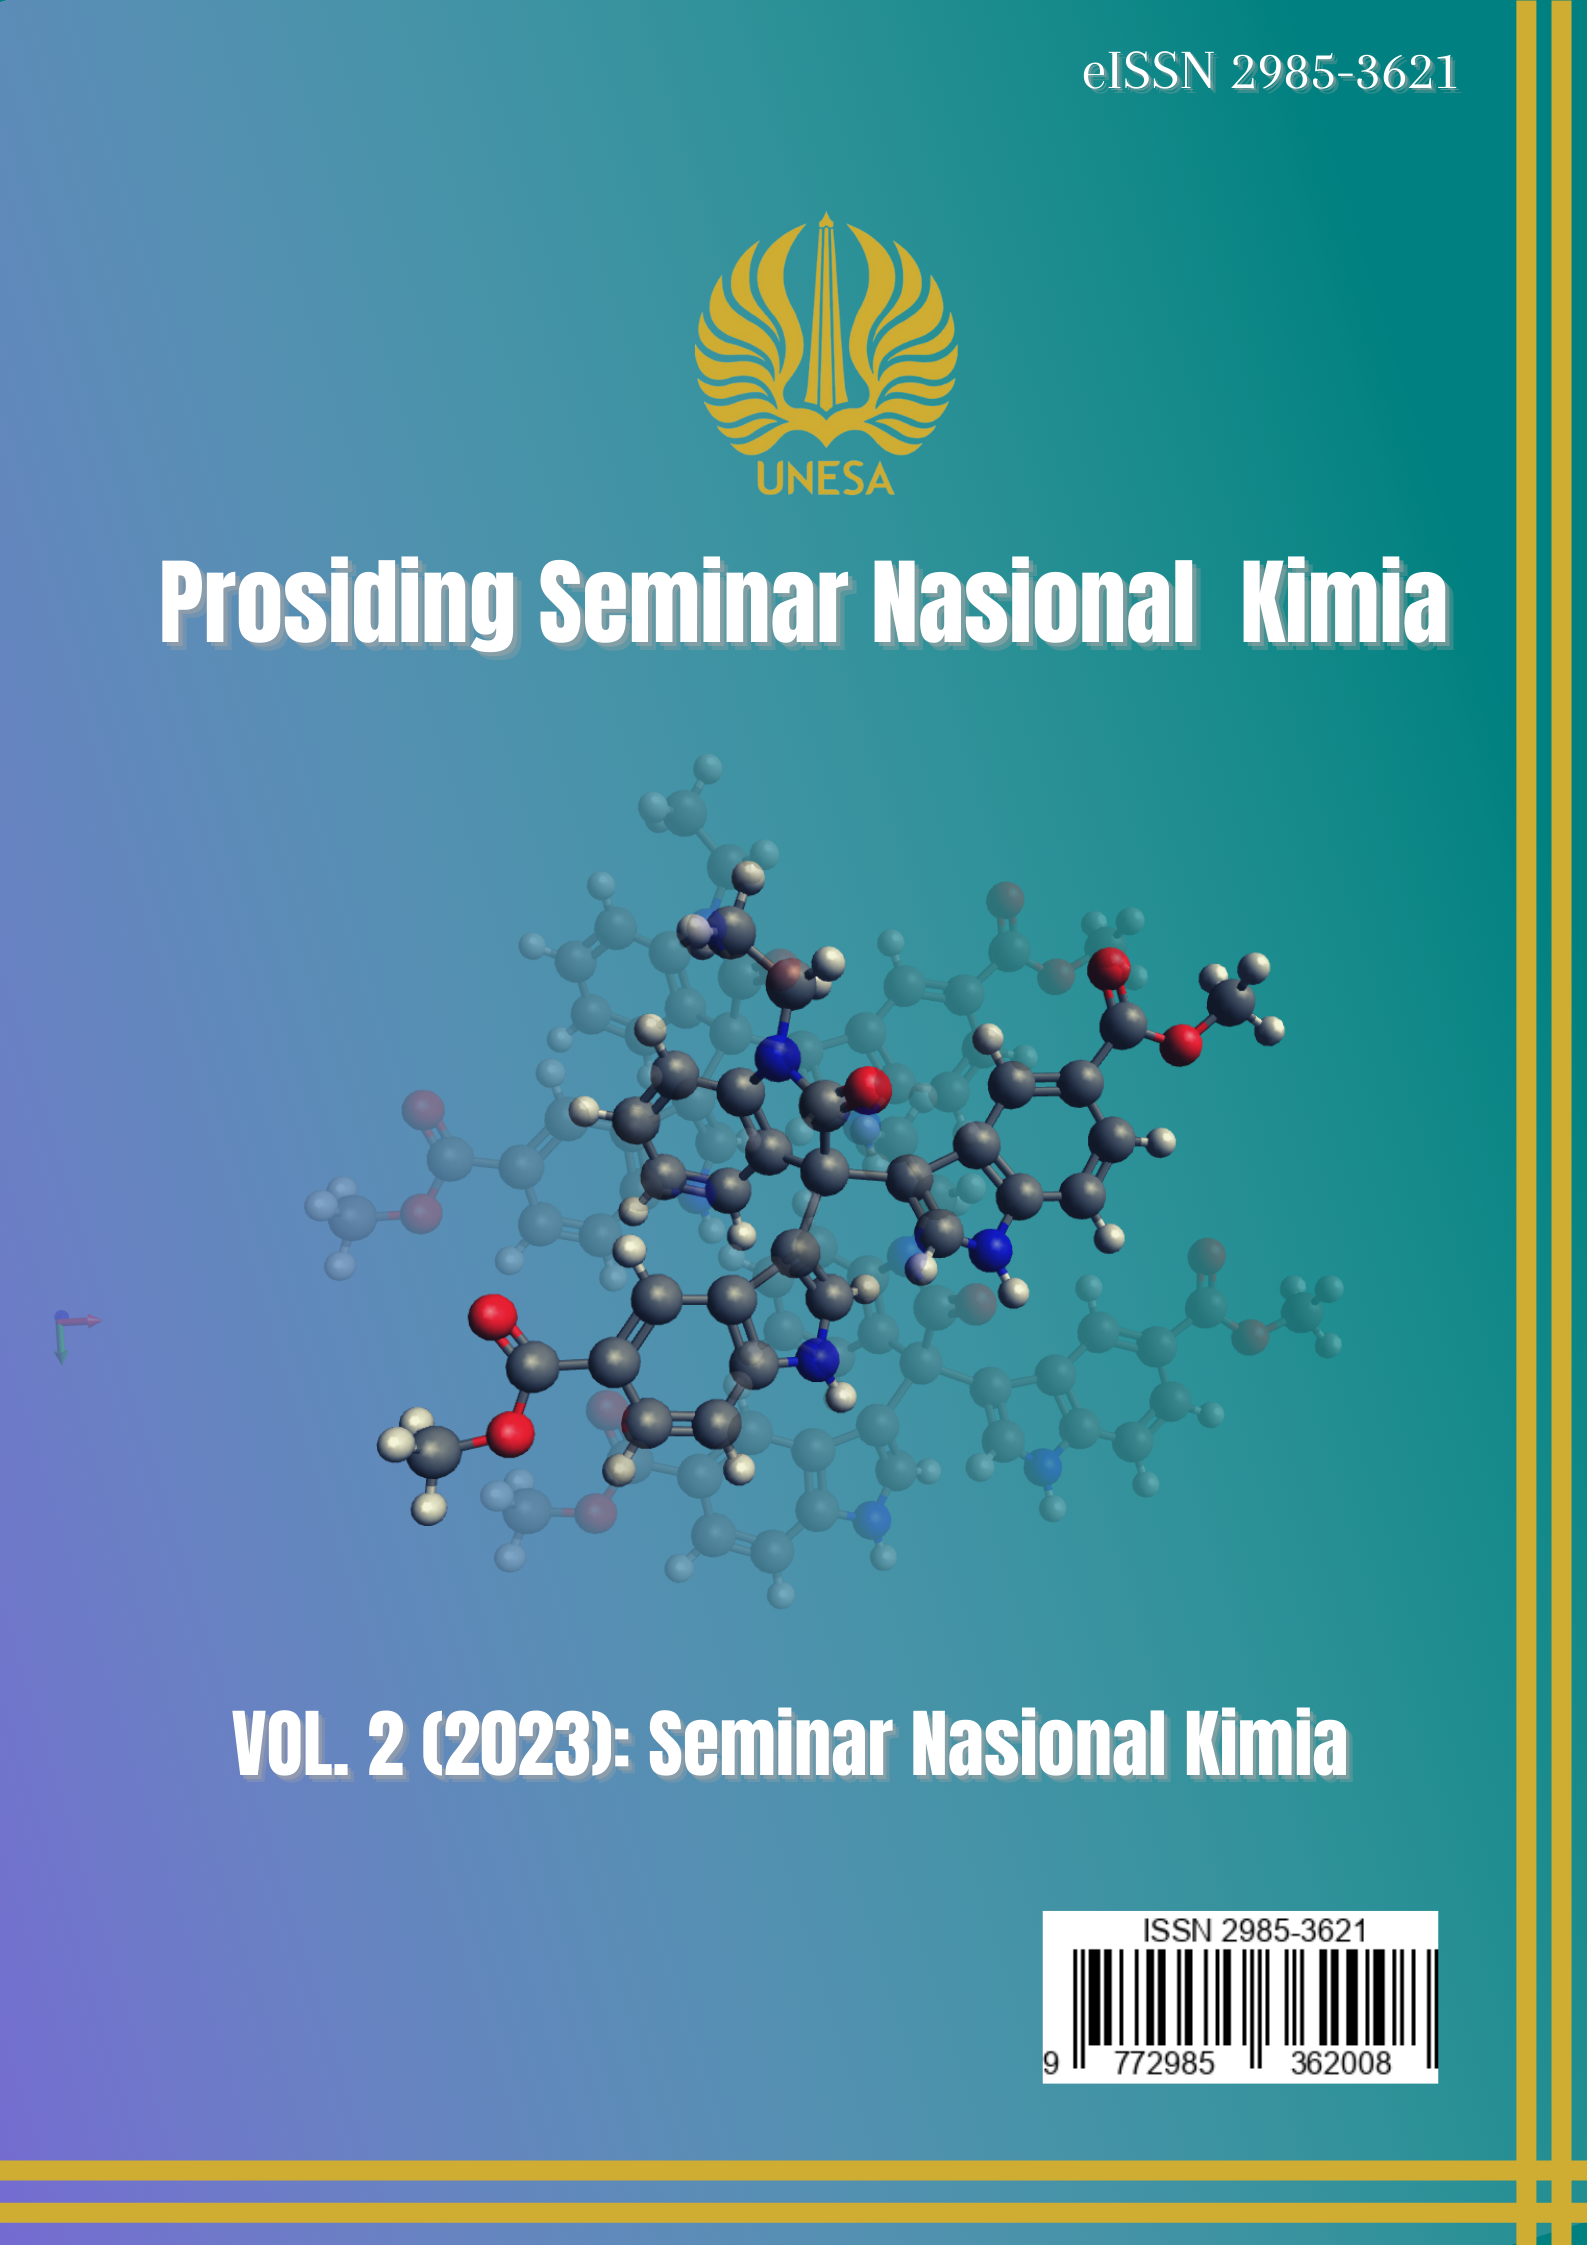 					View Vol. 2 (2023): Prosiding Seminar Nasional Kimia 
				